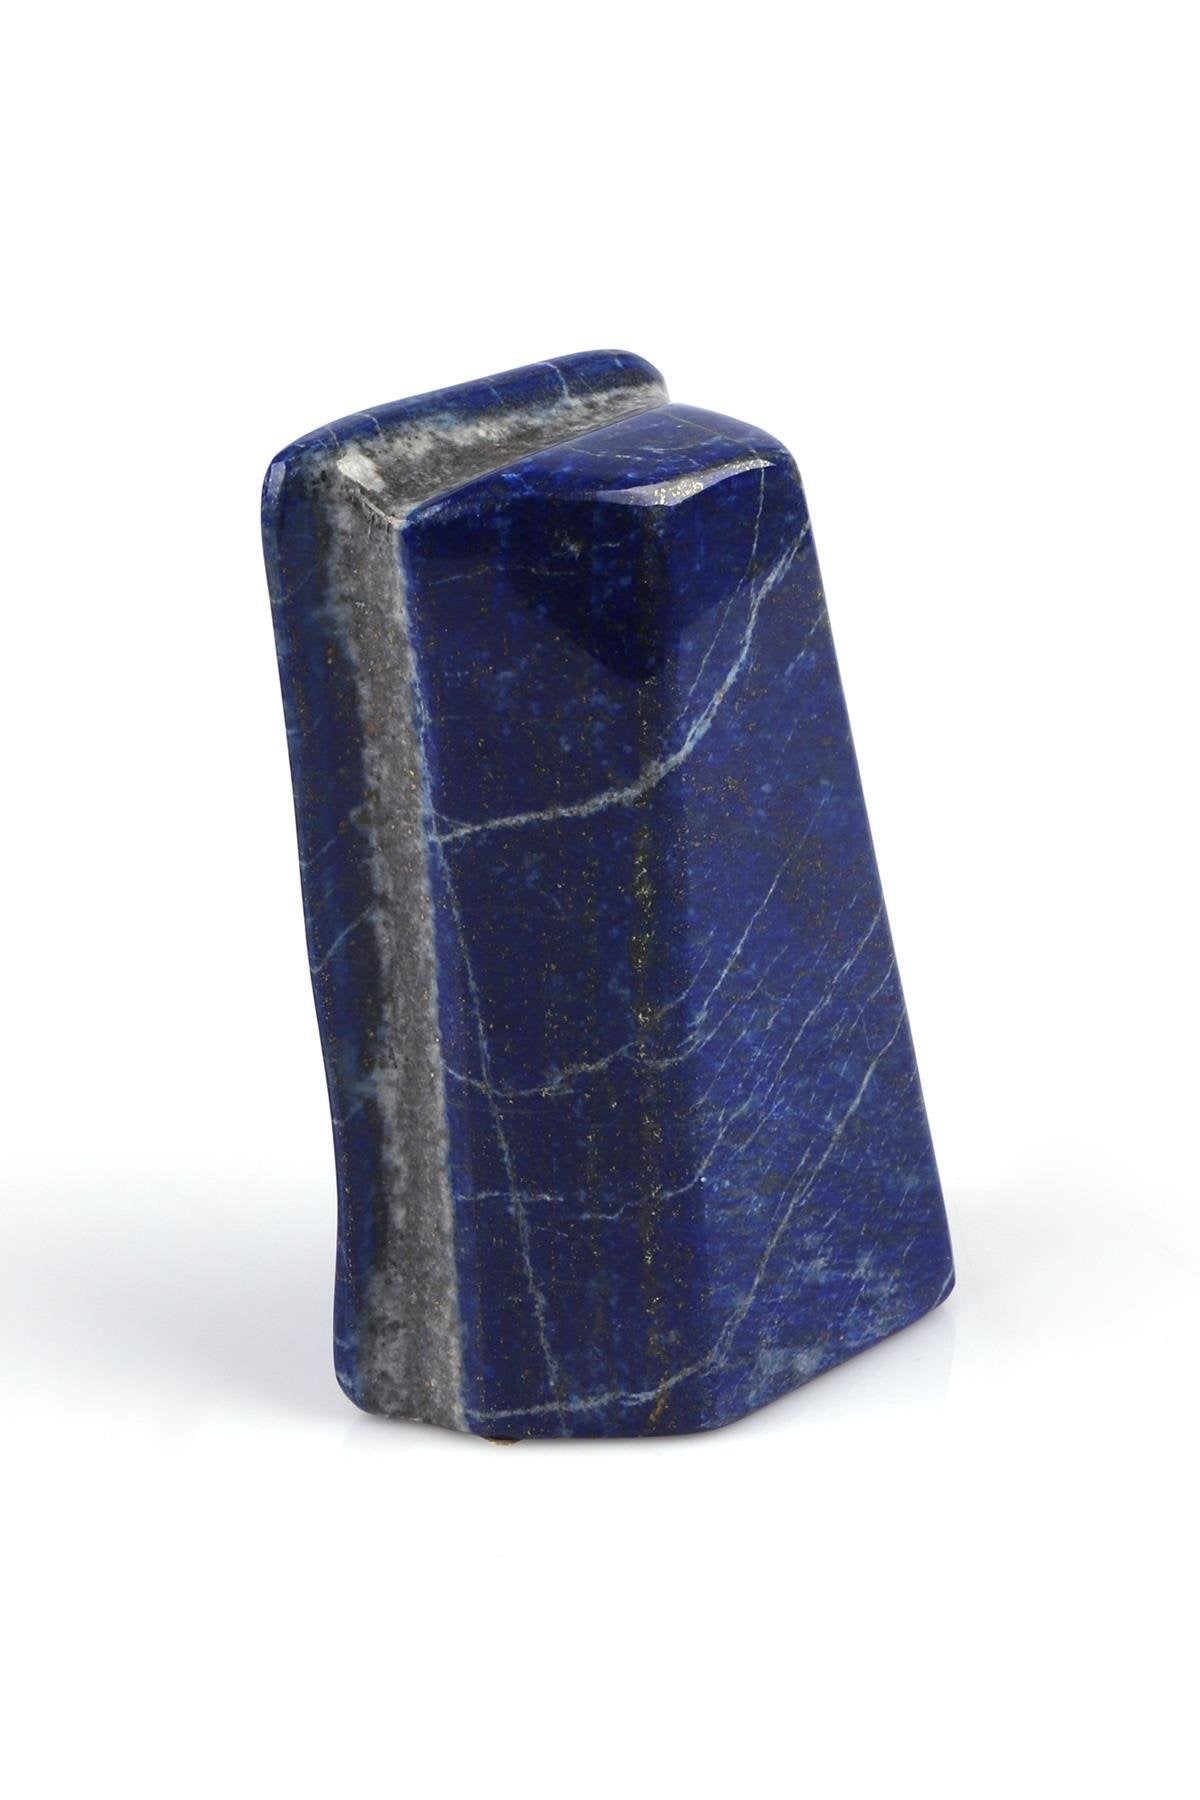 Lapis Lazuli Gemstone Piece